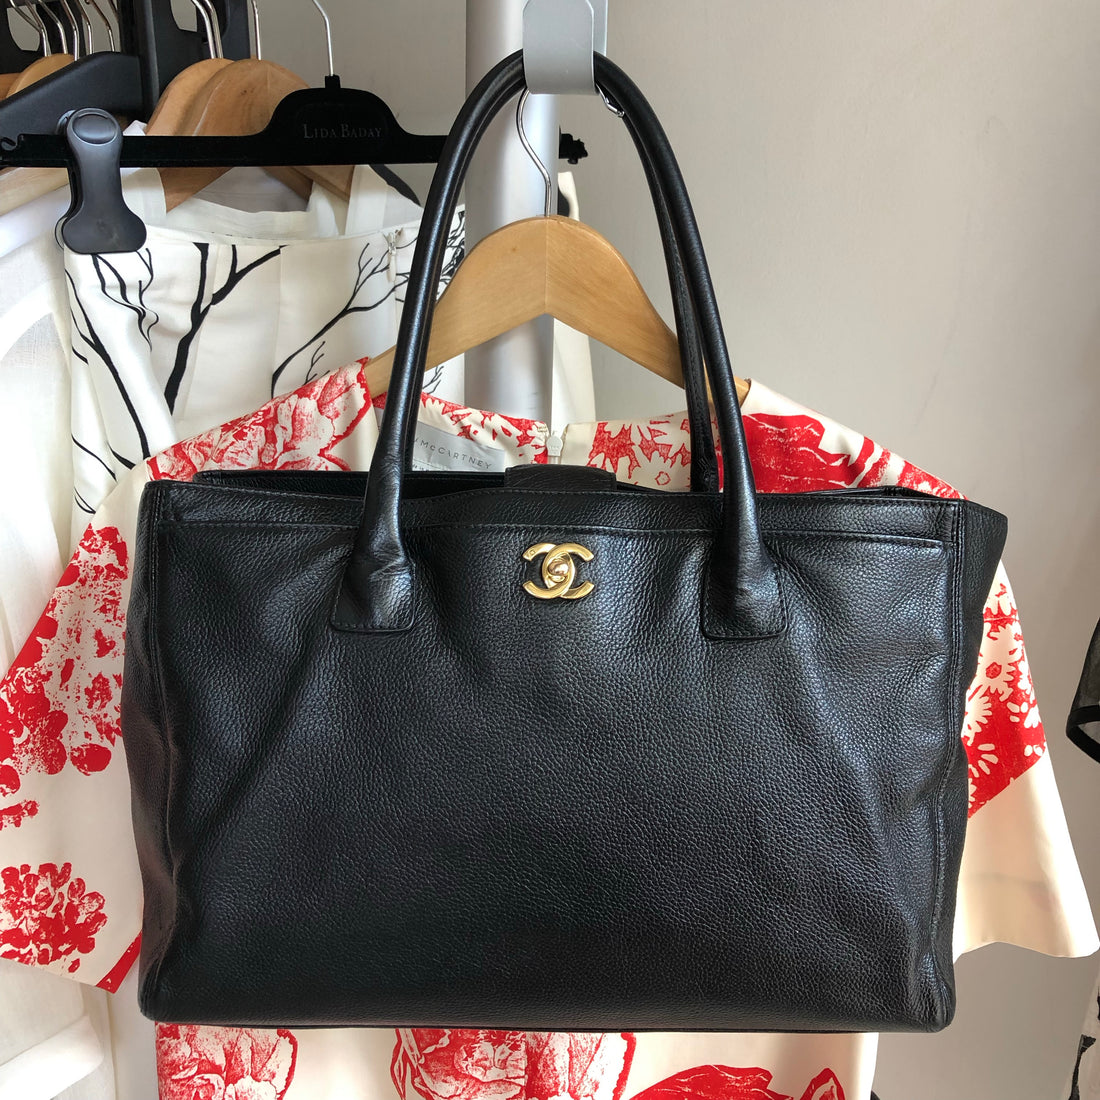 Chanel Black Leather Executive Cerf Tote Bag – I MISS YOU VINTAGE